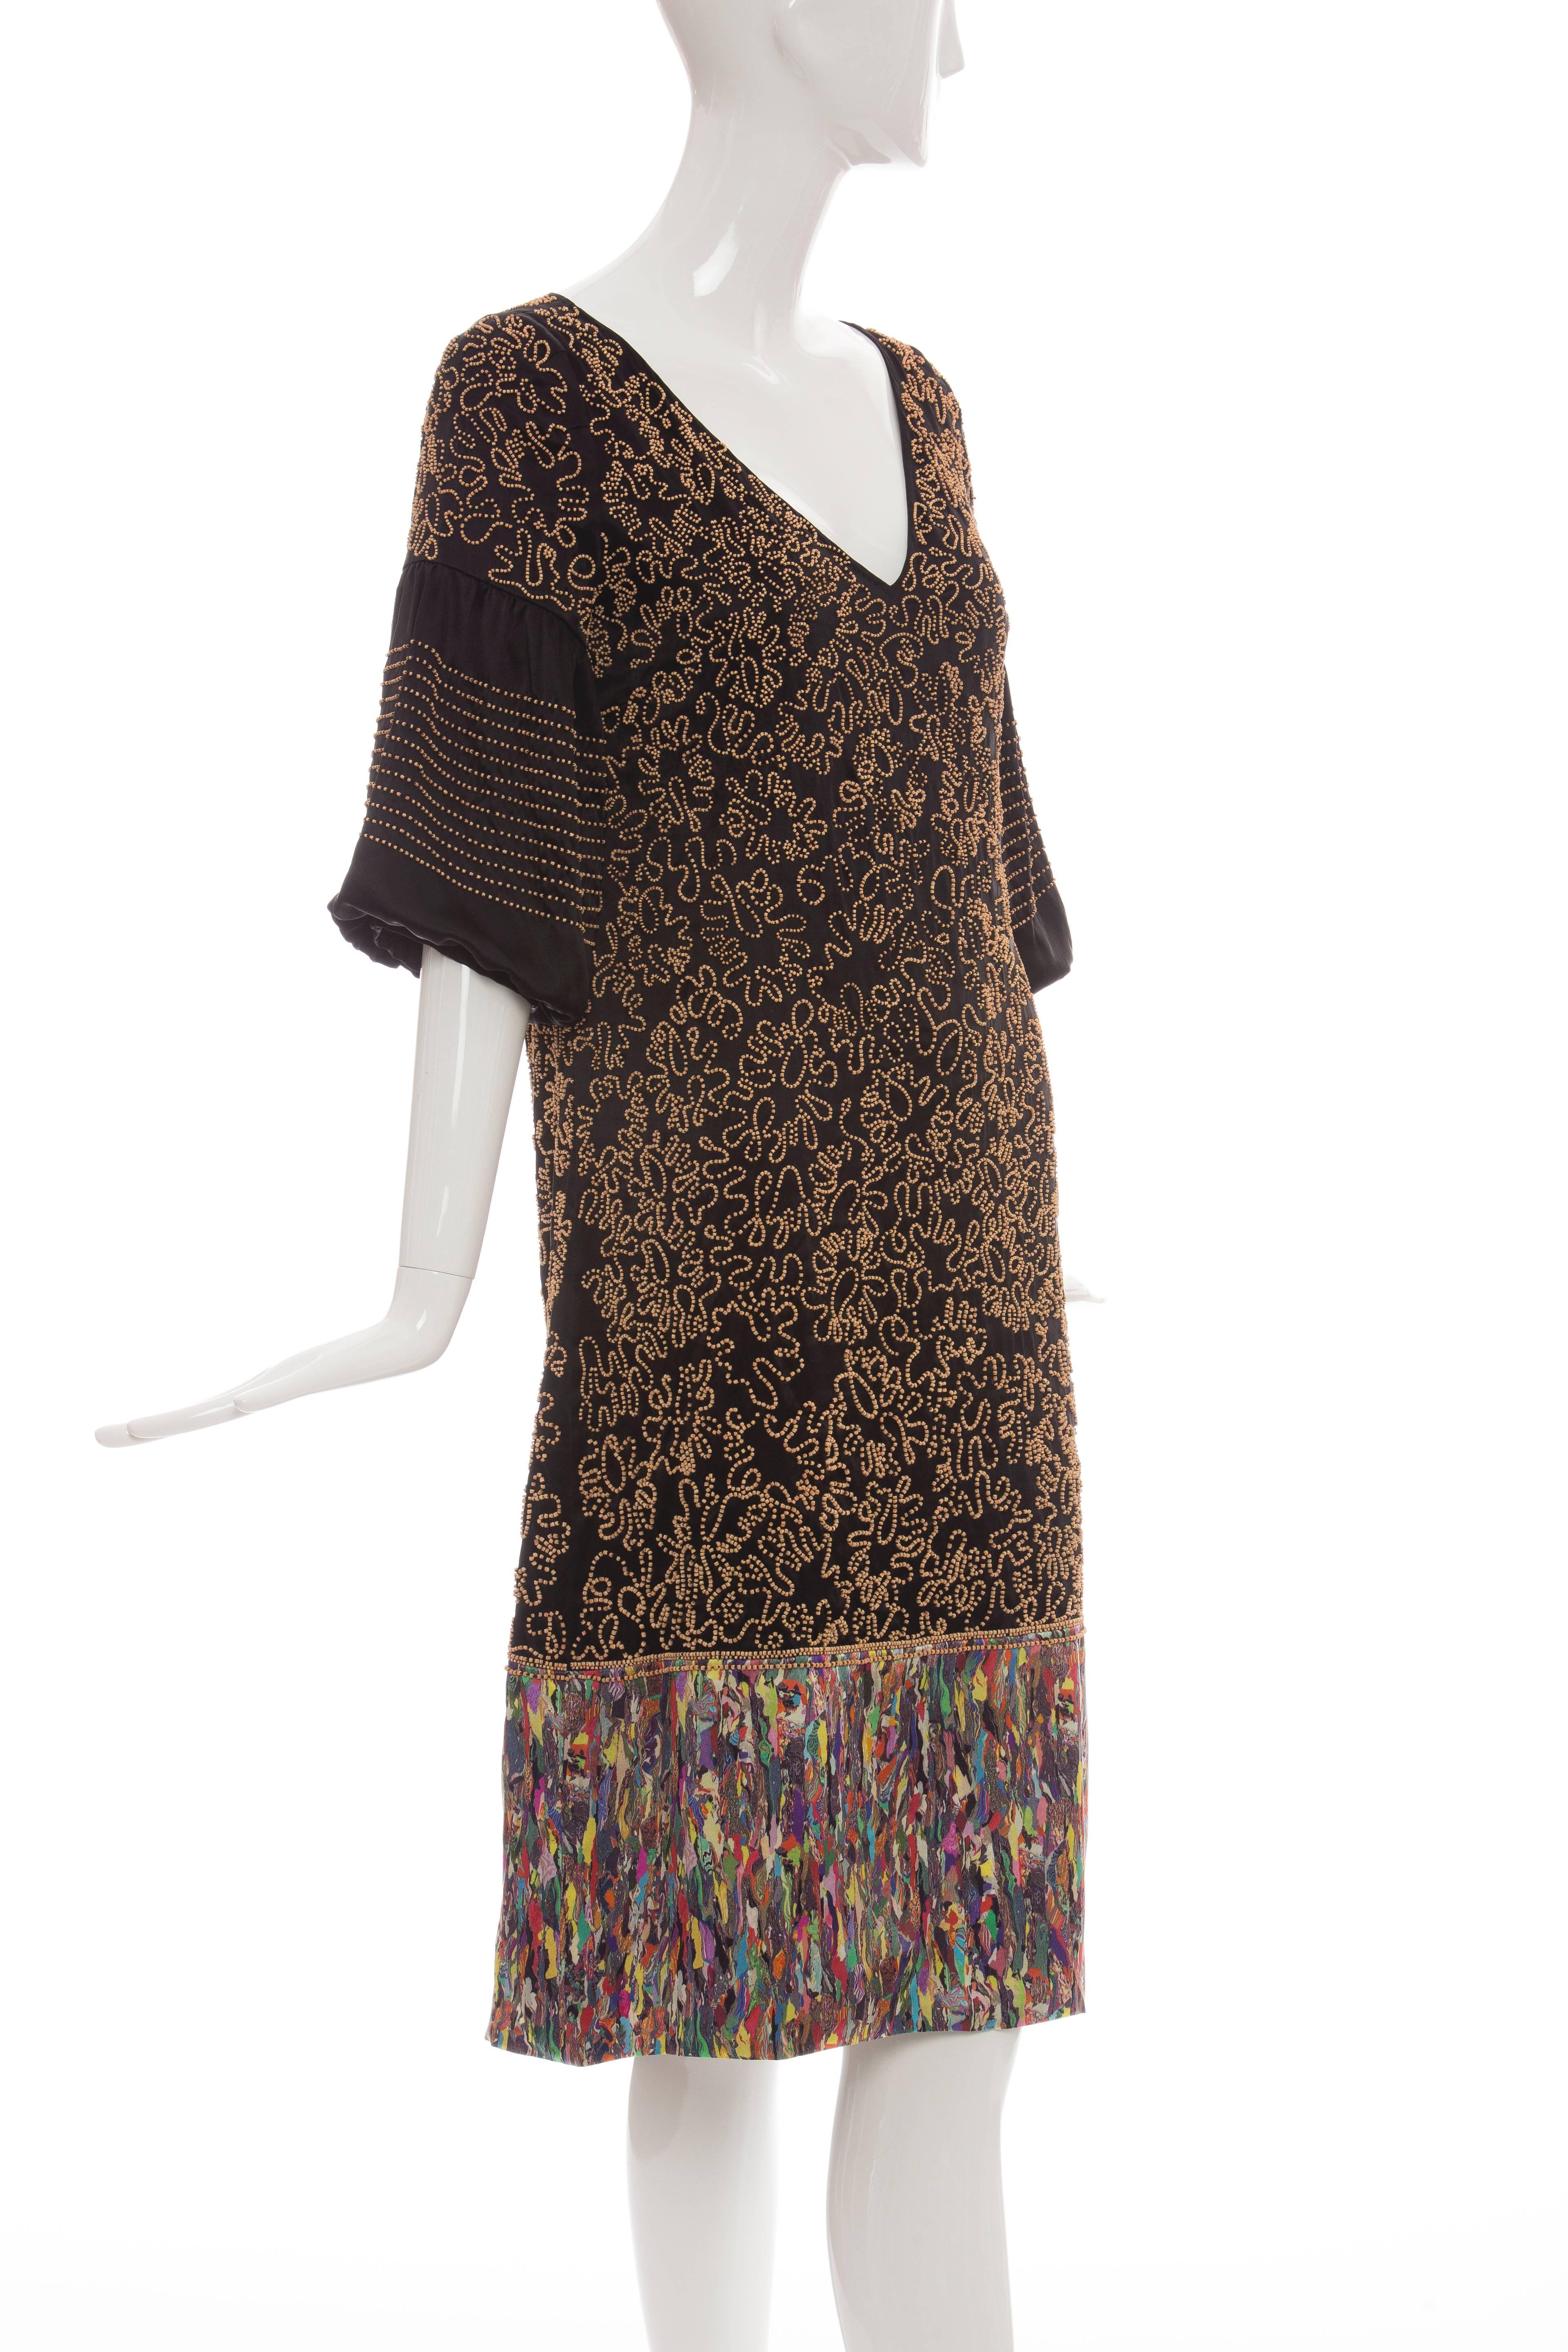 Dries Van Noten Silk Wood Bead Embellished Dress, Autumn - Winter 2008 For Sale 1